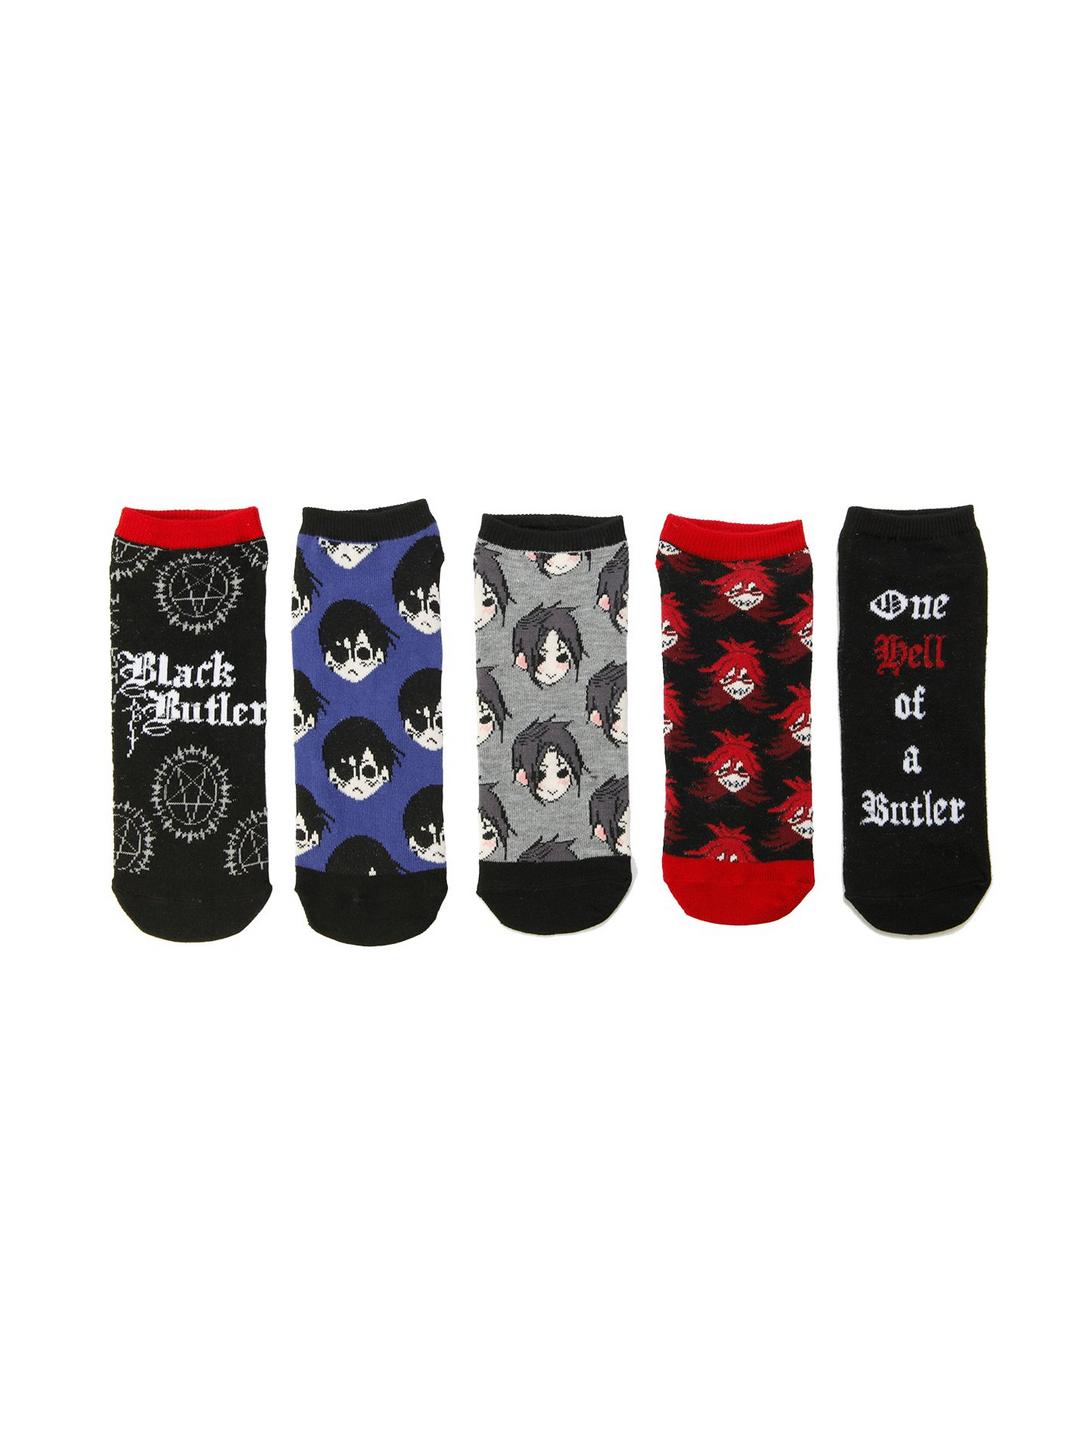 Black Butler Chibi Character No-Show Socks 5 Pair, , hi-res